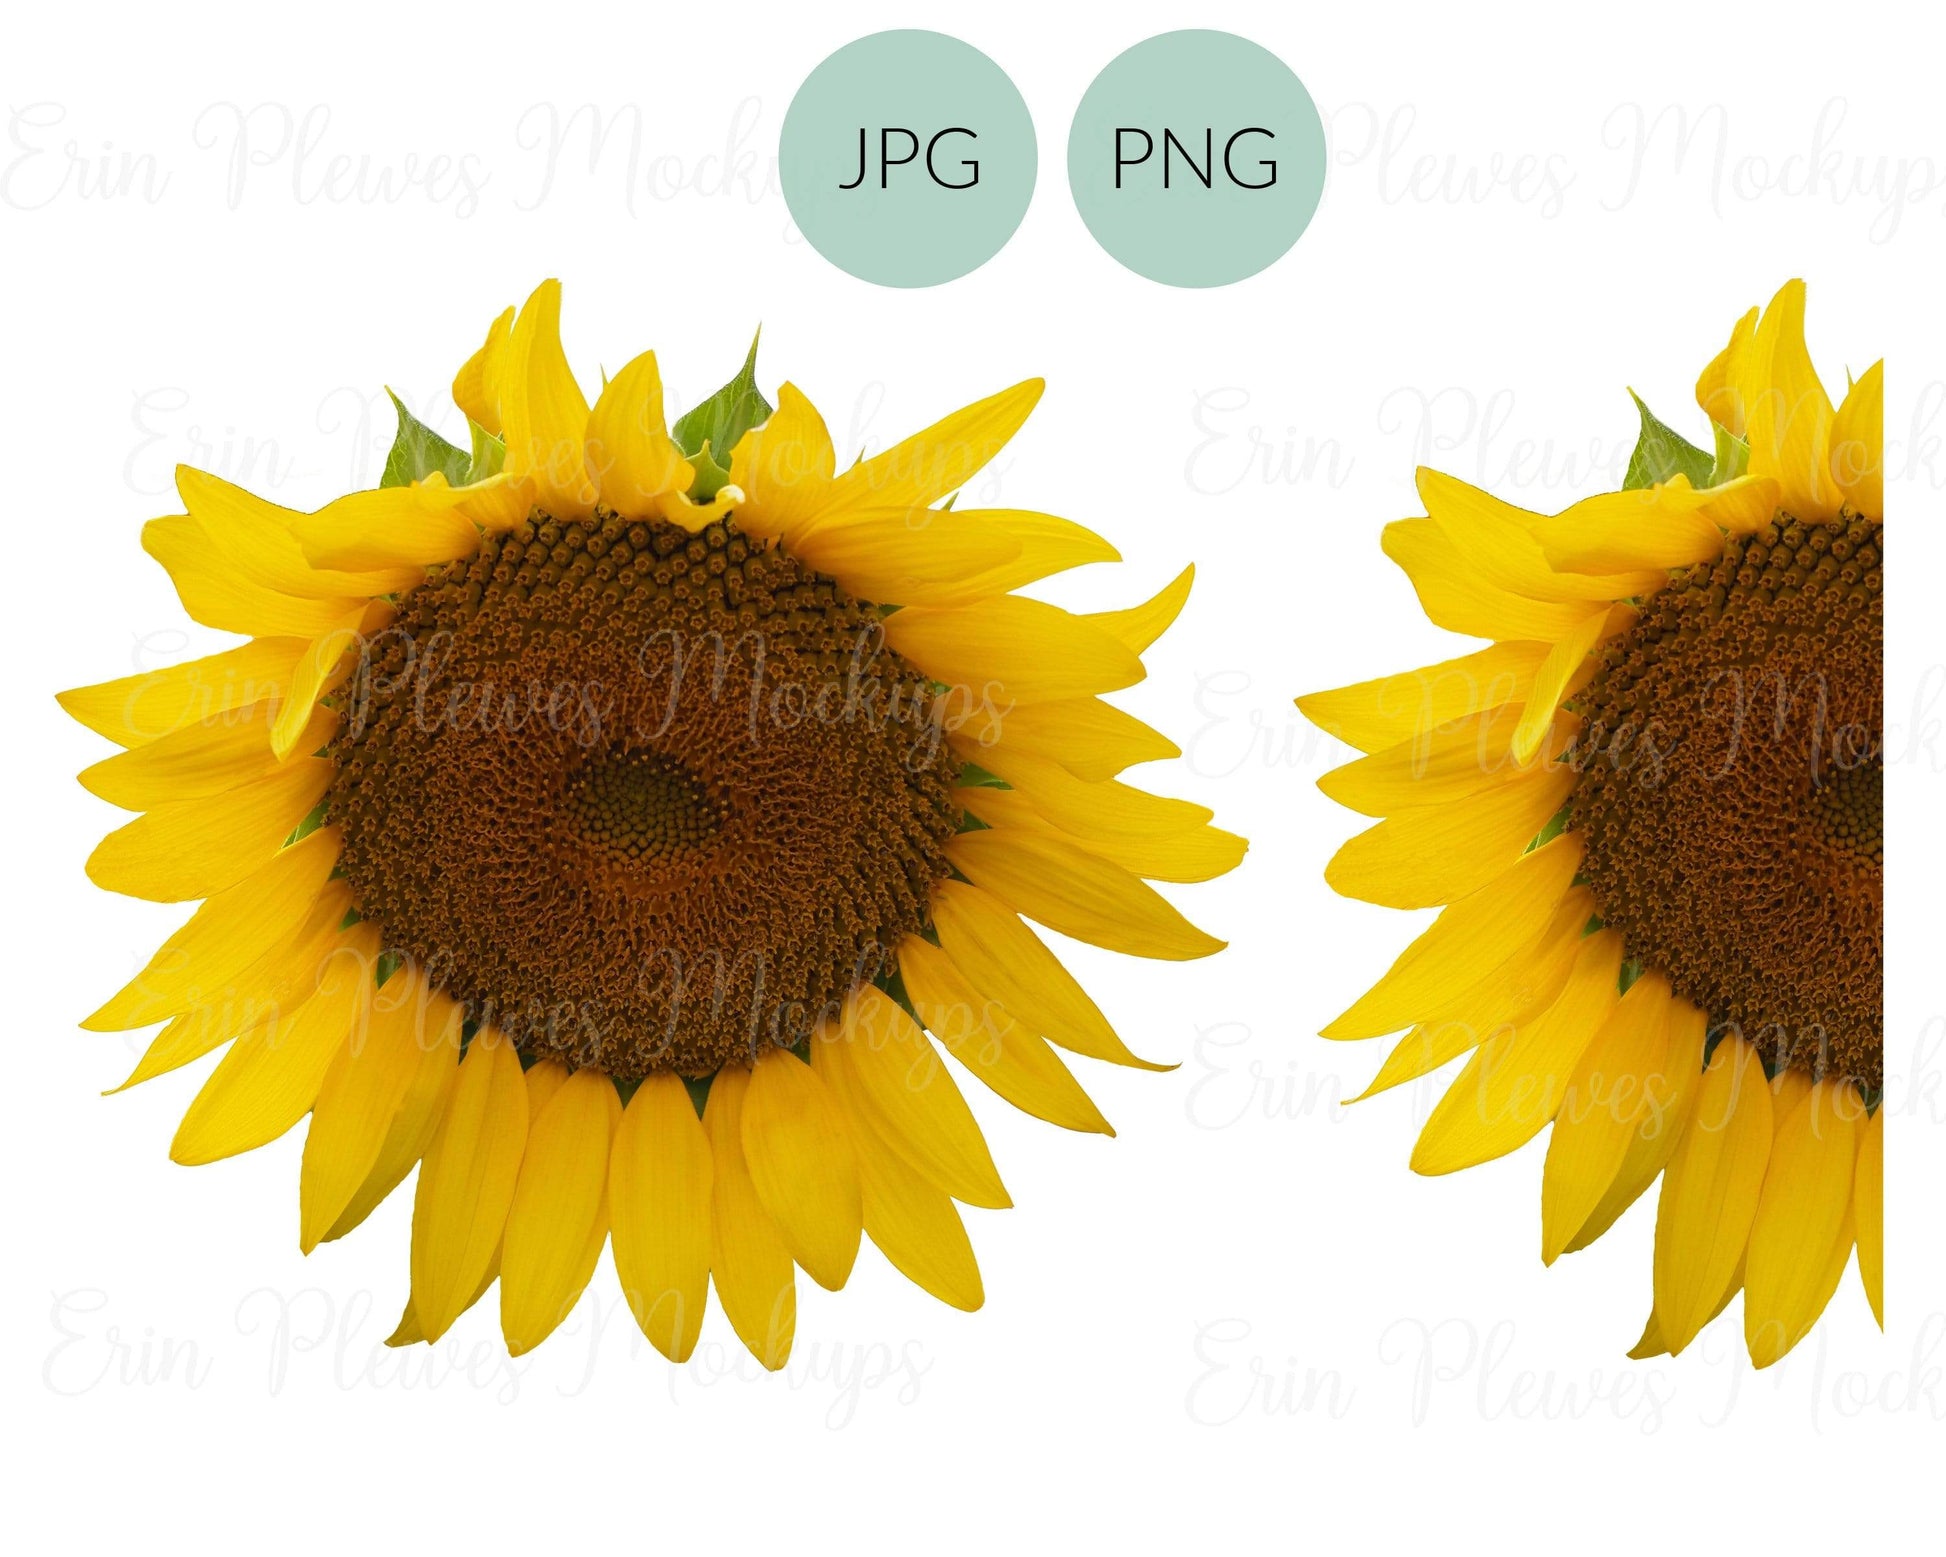 Erin Plewes Mockups Half Sunflower PNG, Whole Sunflower PNG,  Sunflower Bundle for Sublimation and Clear Waterslide, Sun Flower Clip Art JPEG